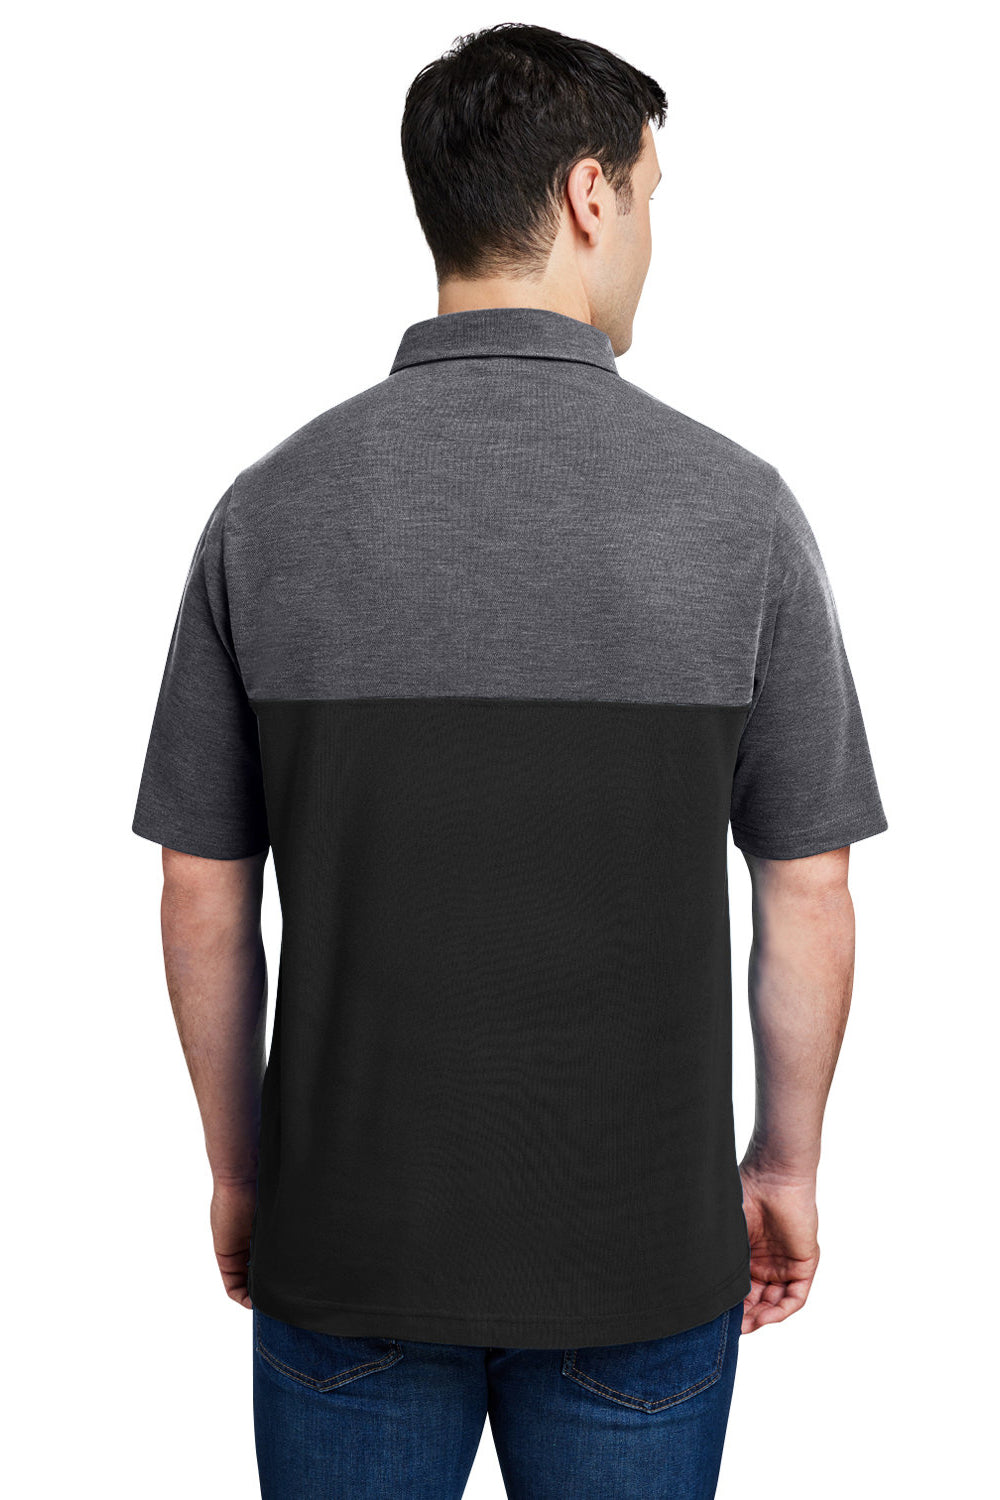 Core 365 CE112C Mens Fusion ChromaSoft Performance Moisture Wicking Colorblock Short Sleeve Polo Shirt Black/Heather Carbon Grey Back